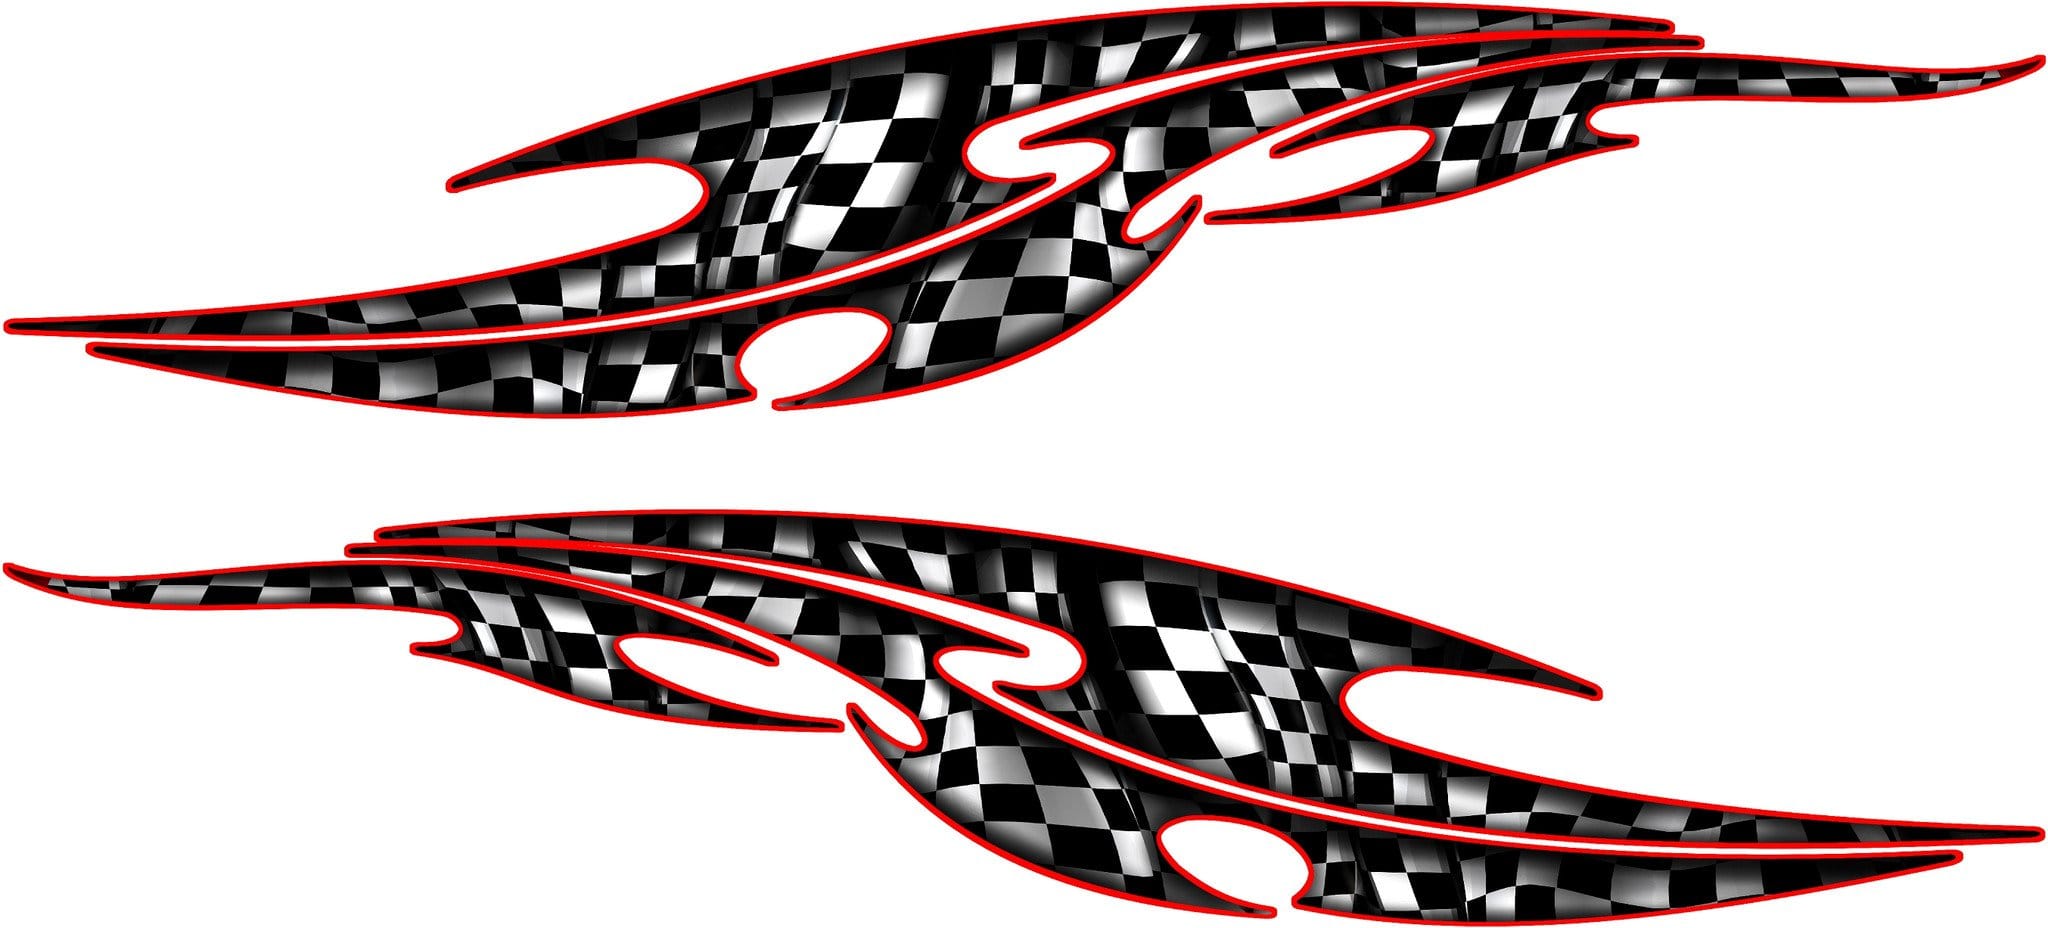 Tribal racing decals, car racing graphics, checkered car 